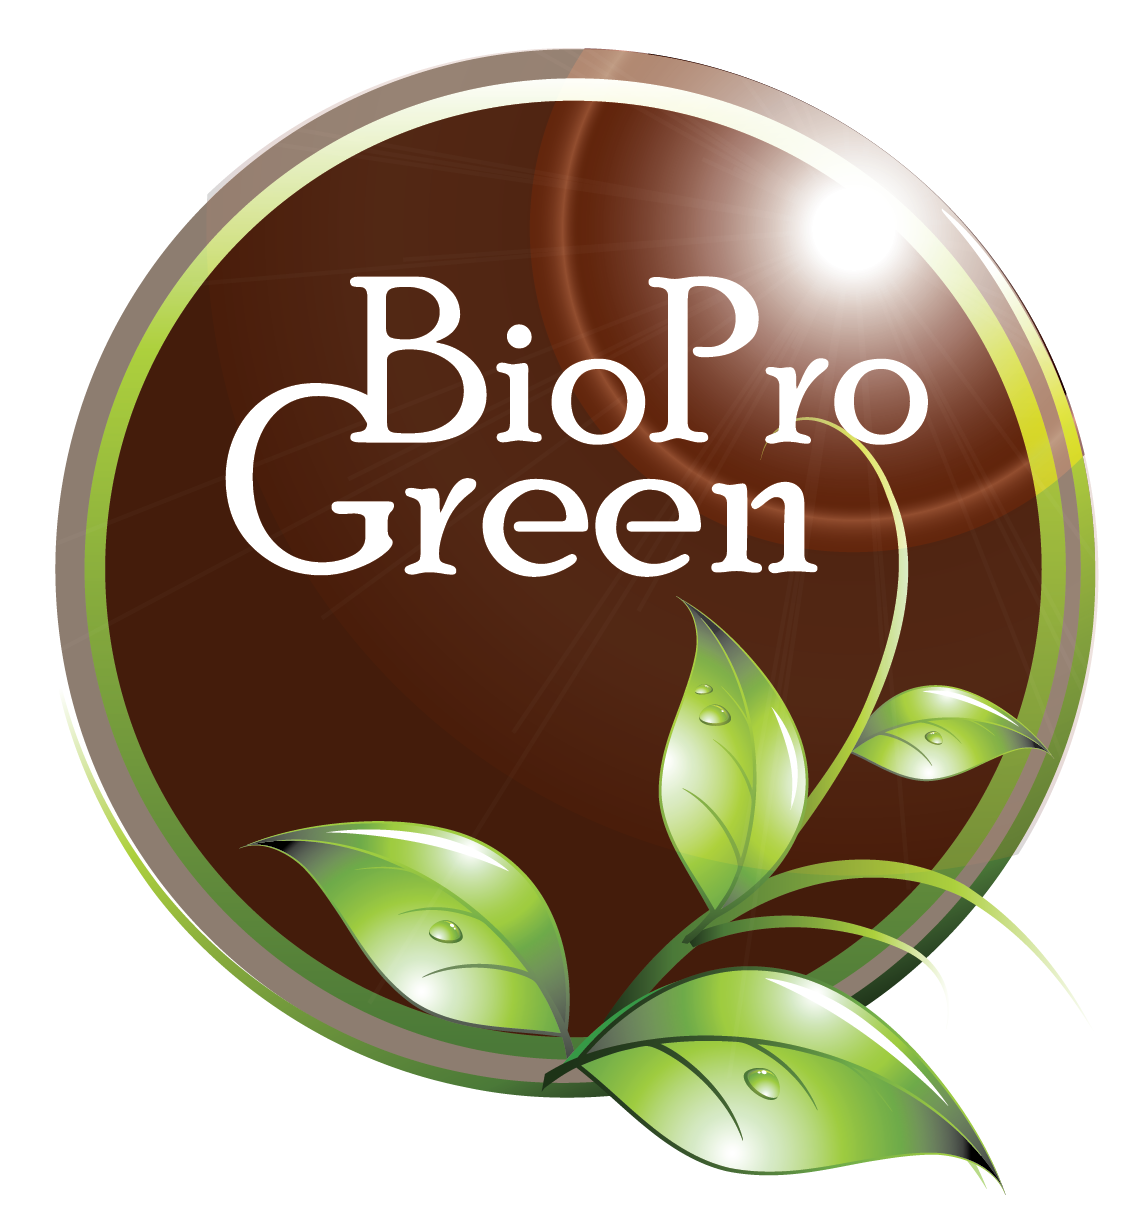 BioPro Green